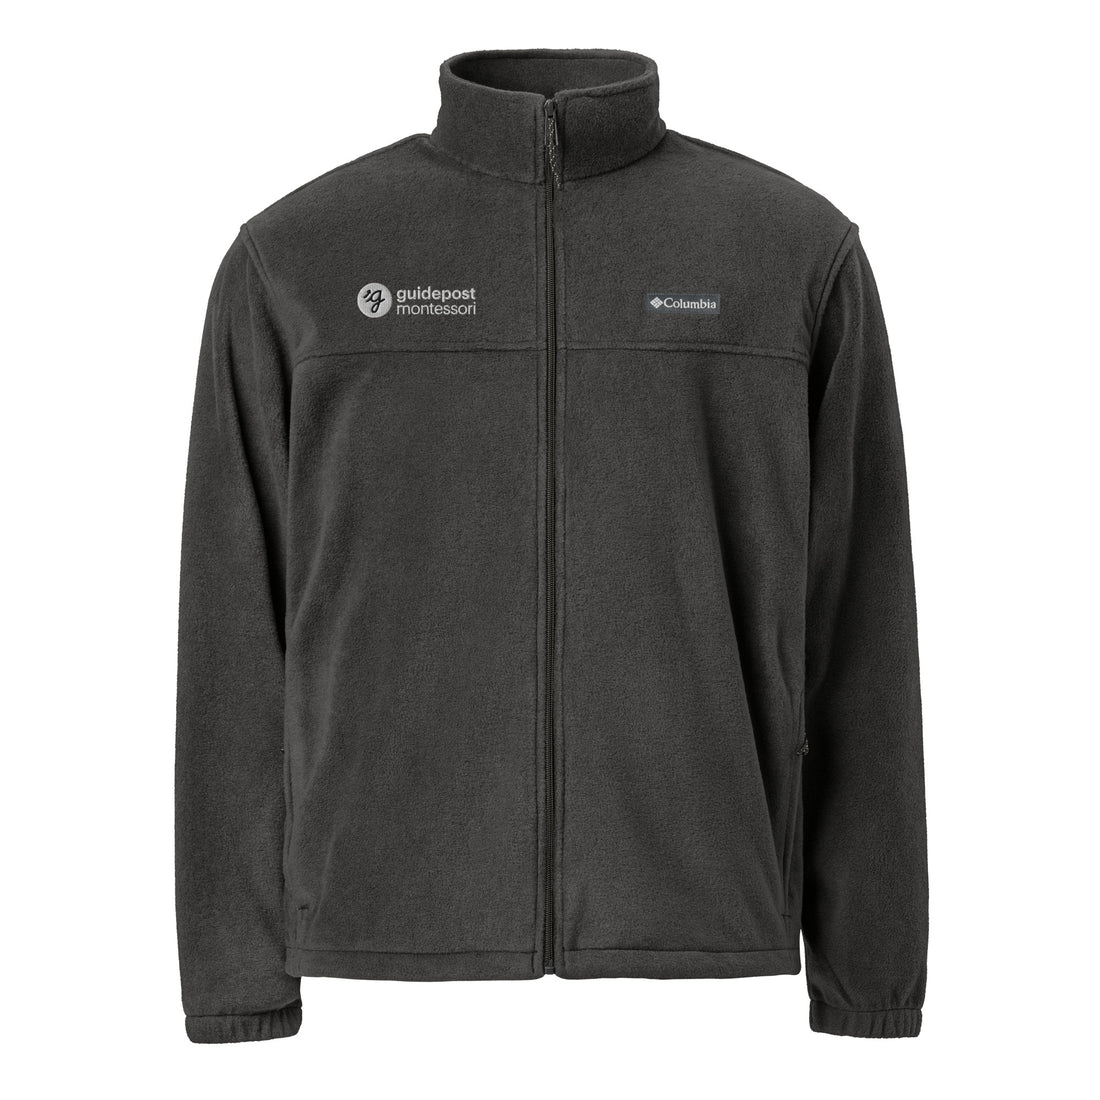 Guidepost Apparel - Unisex Columbia fleece jacket